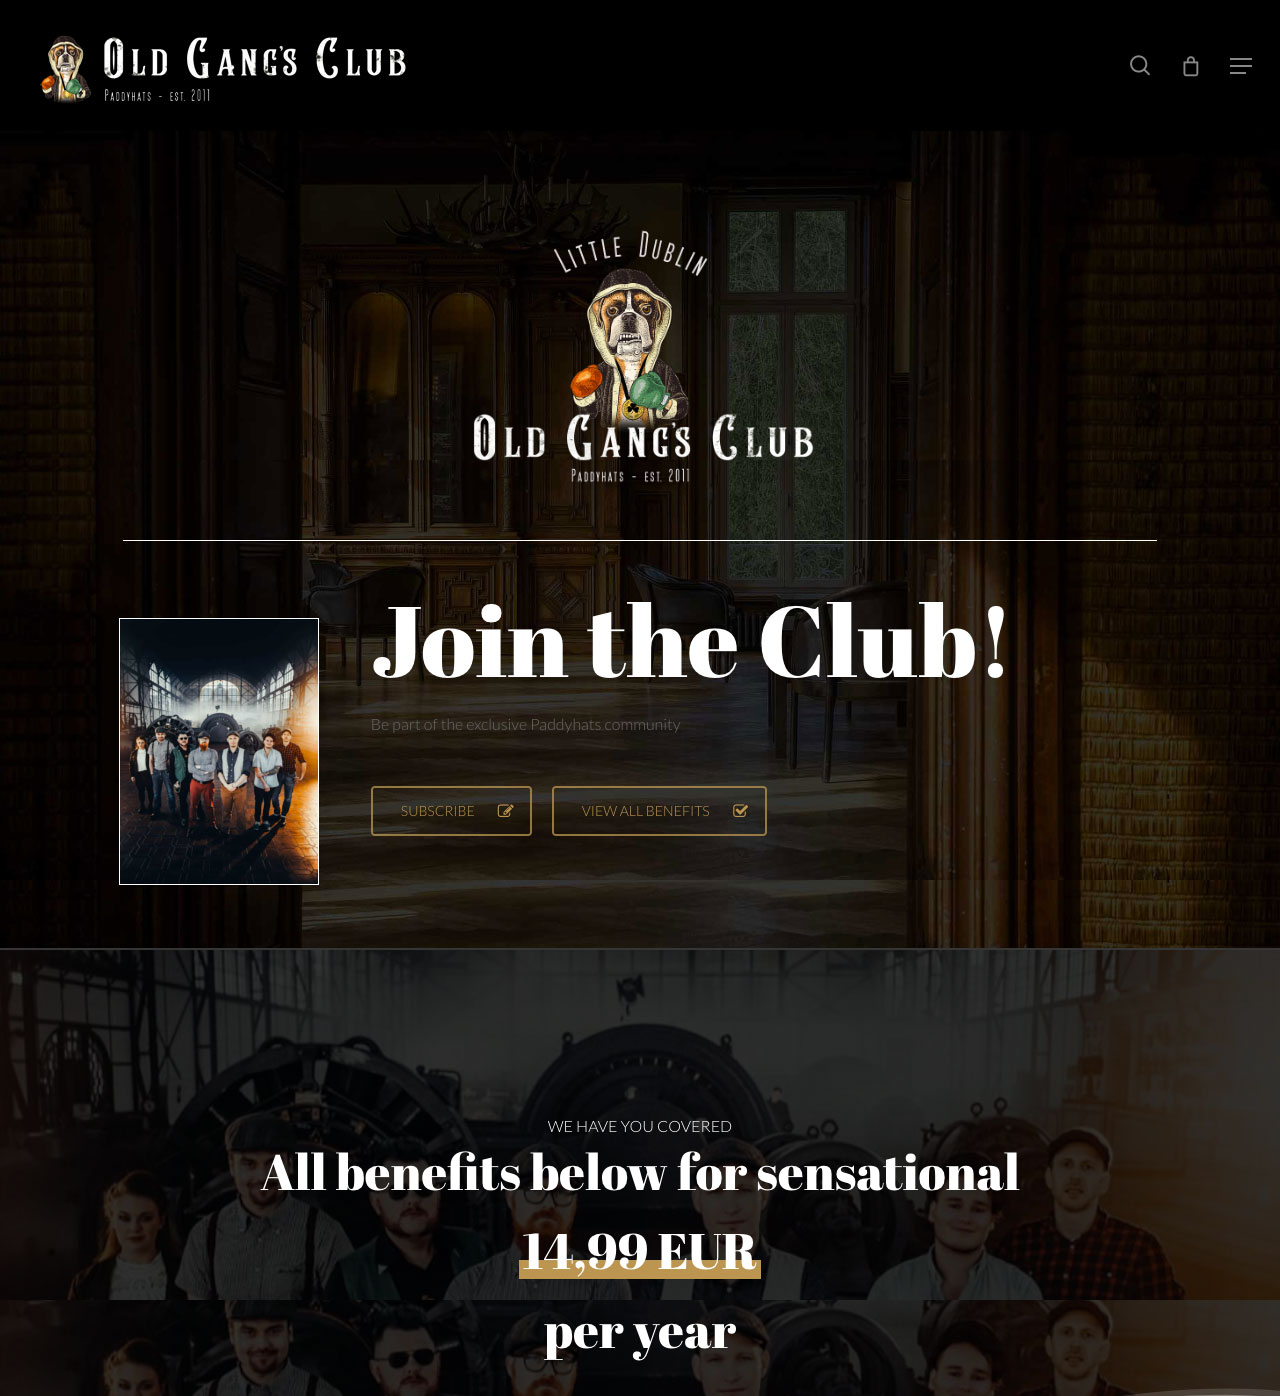 OLD GANG'S CLUB, OLD GANG&#8217;S Club öffnet seine Türen